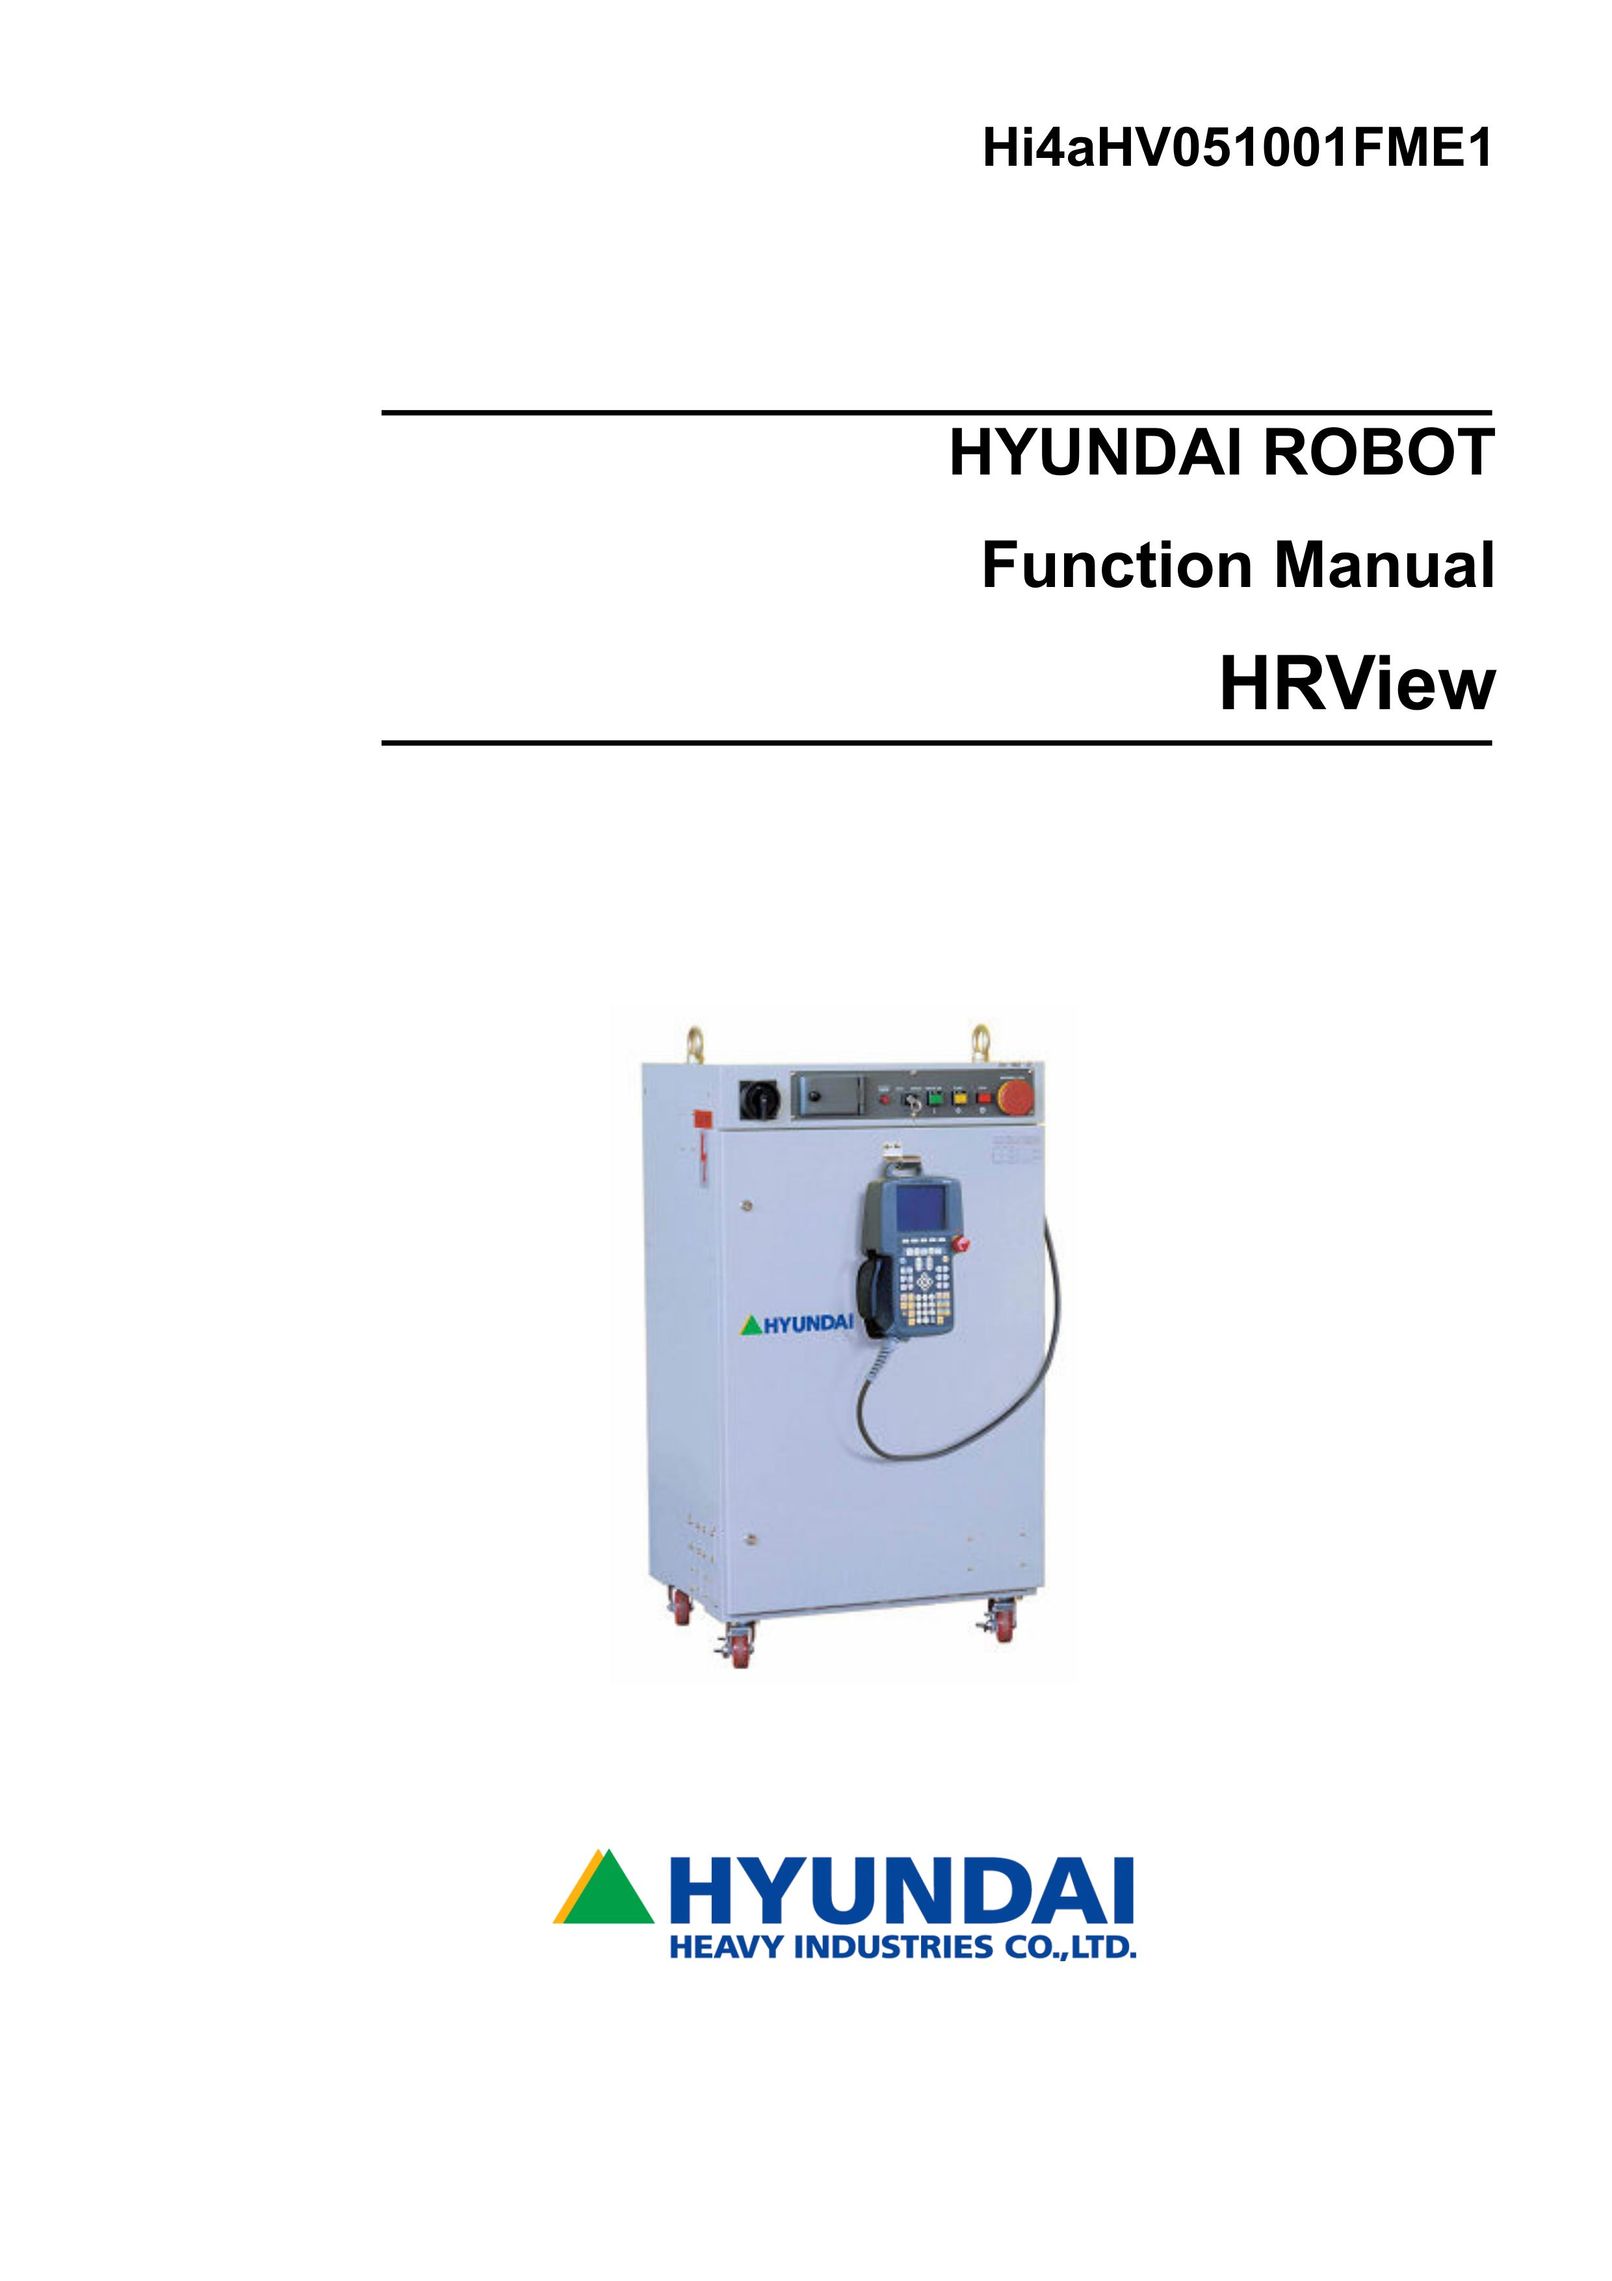 Hyundai Hi4aHV051001FME1 Robotics User Manual